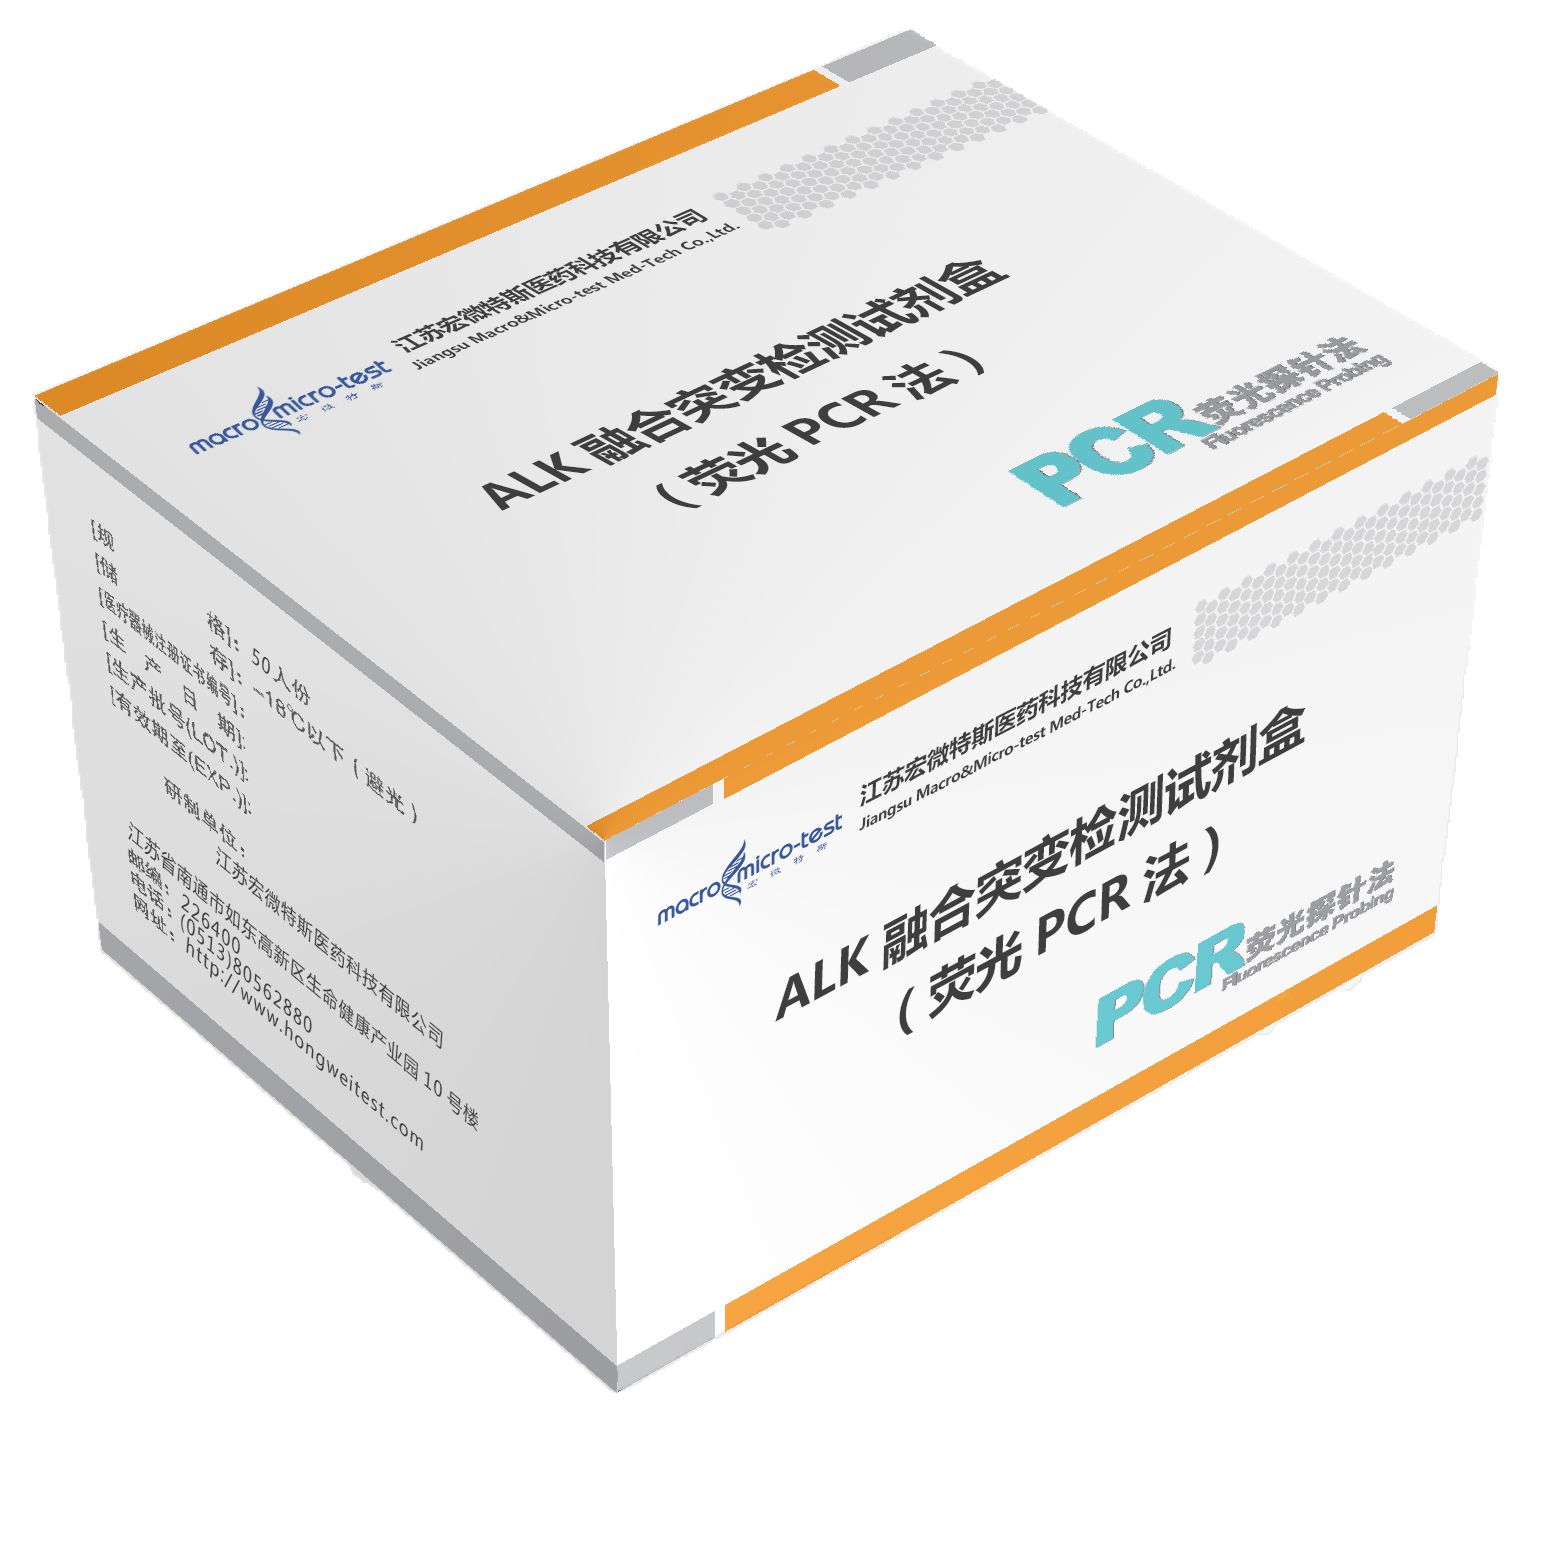 ALK融合突变检测试剂盒（荧光PCR法）